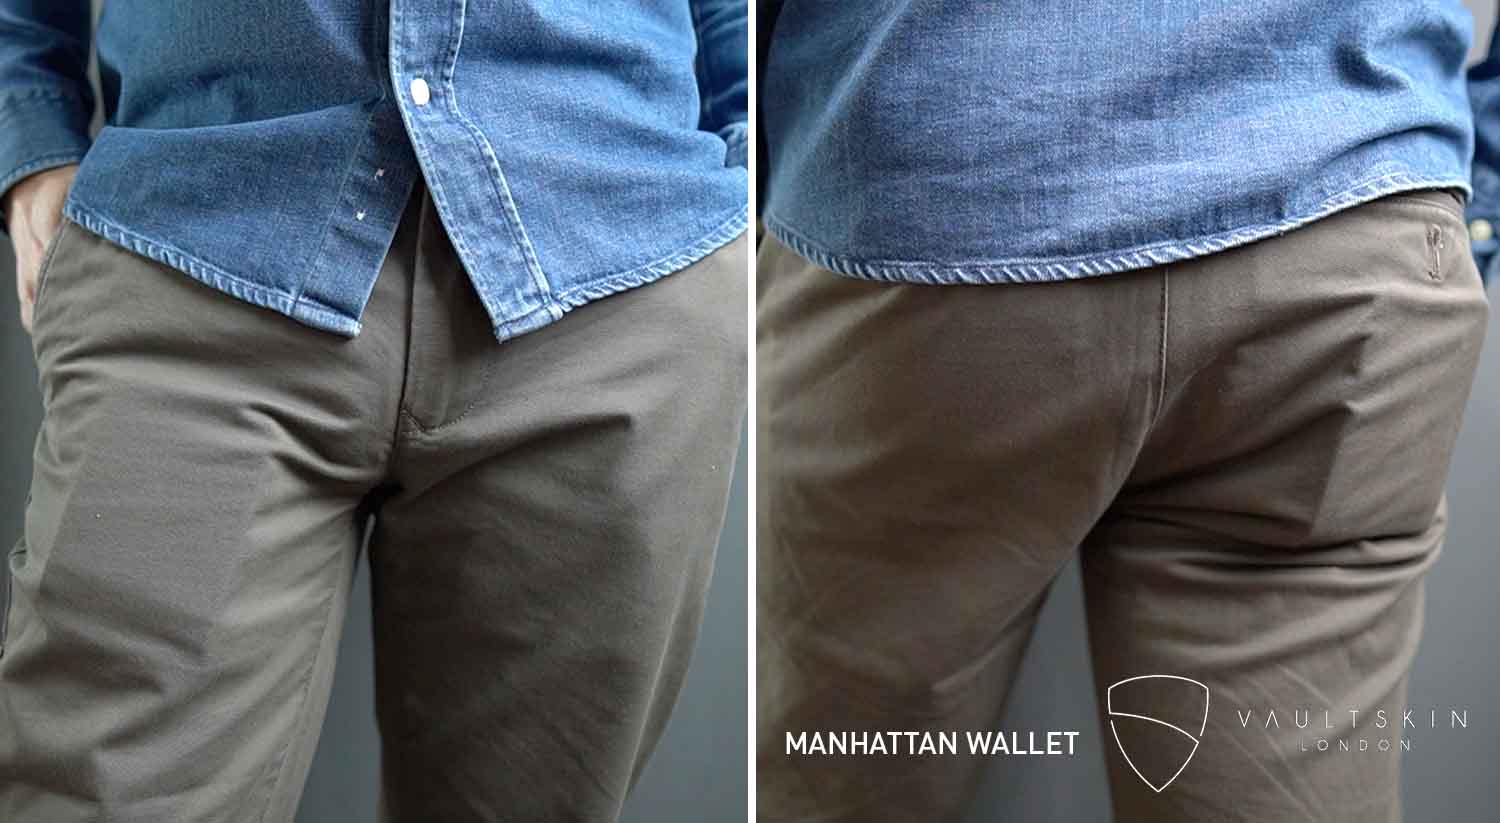 vaultskin manhattan wallet in pockets